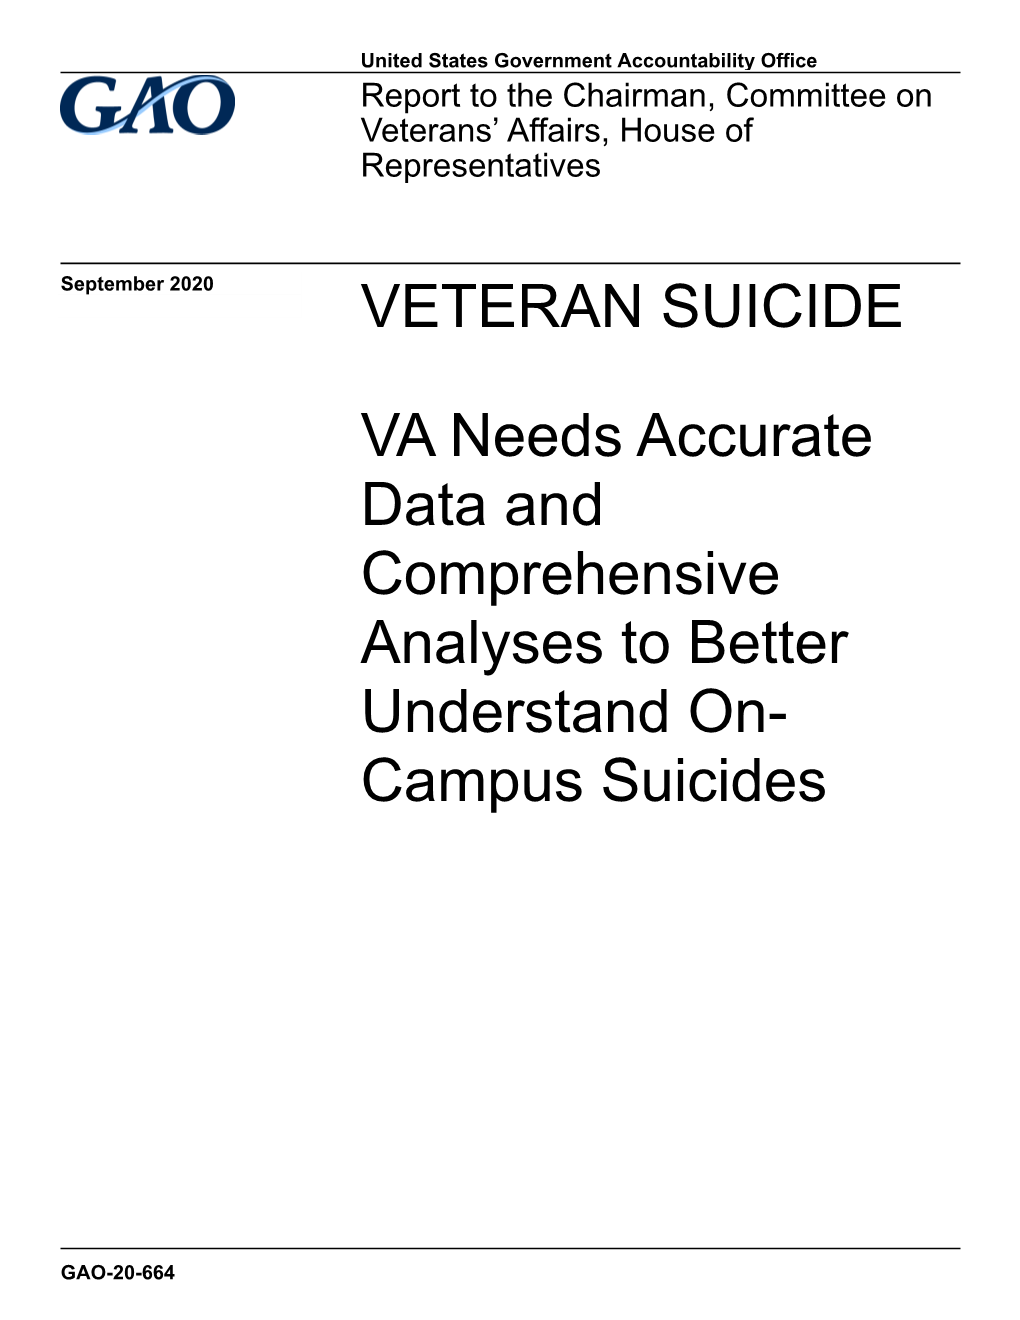 GAO-20-664, VETERAN SUICIDE: VA Needs Accurate Data And